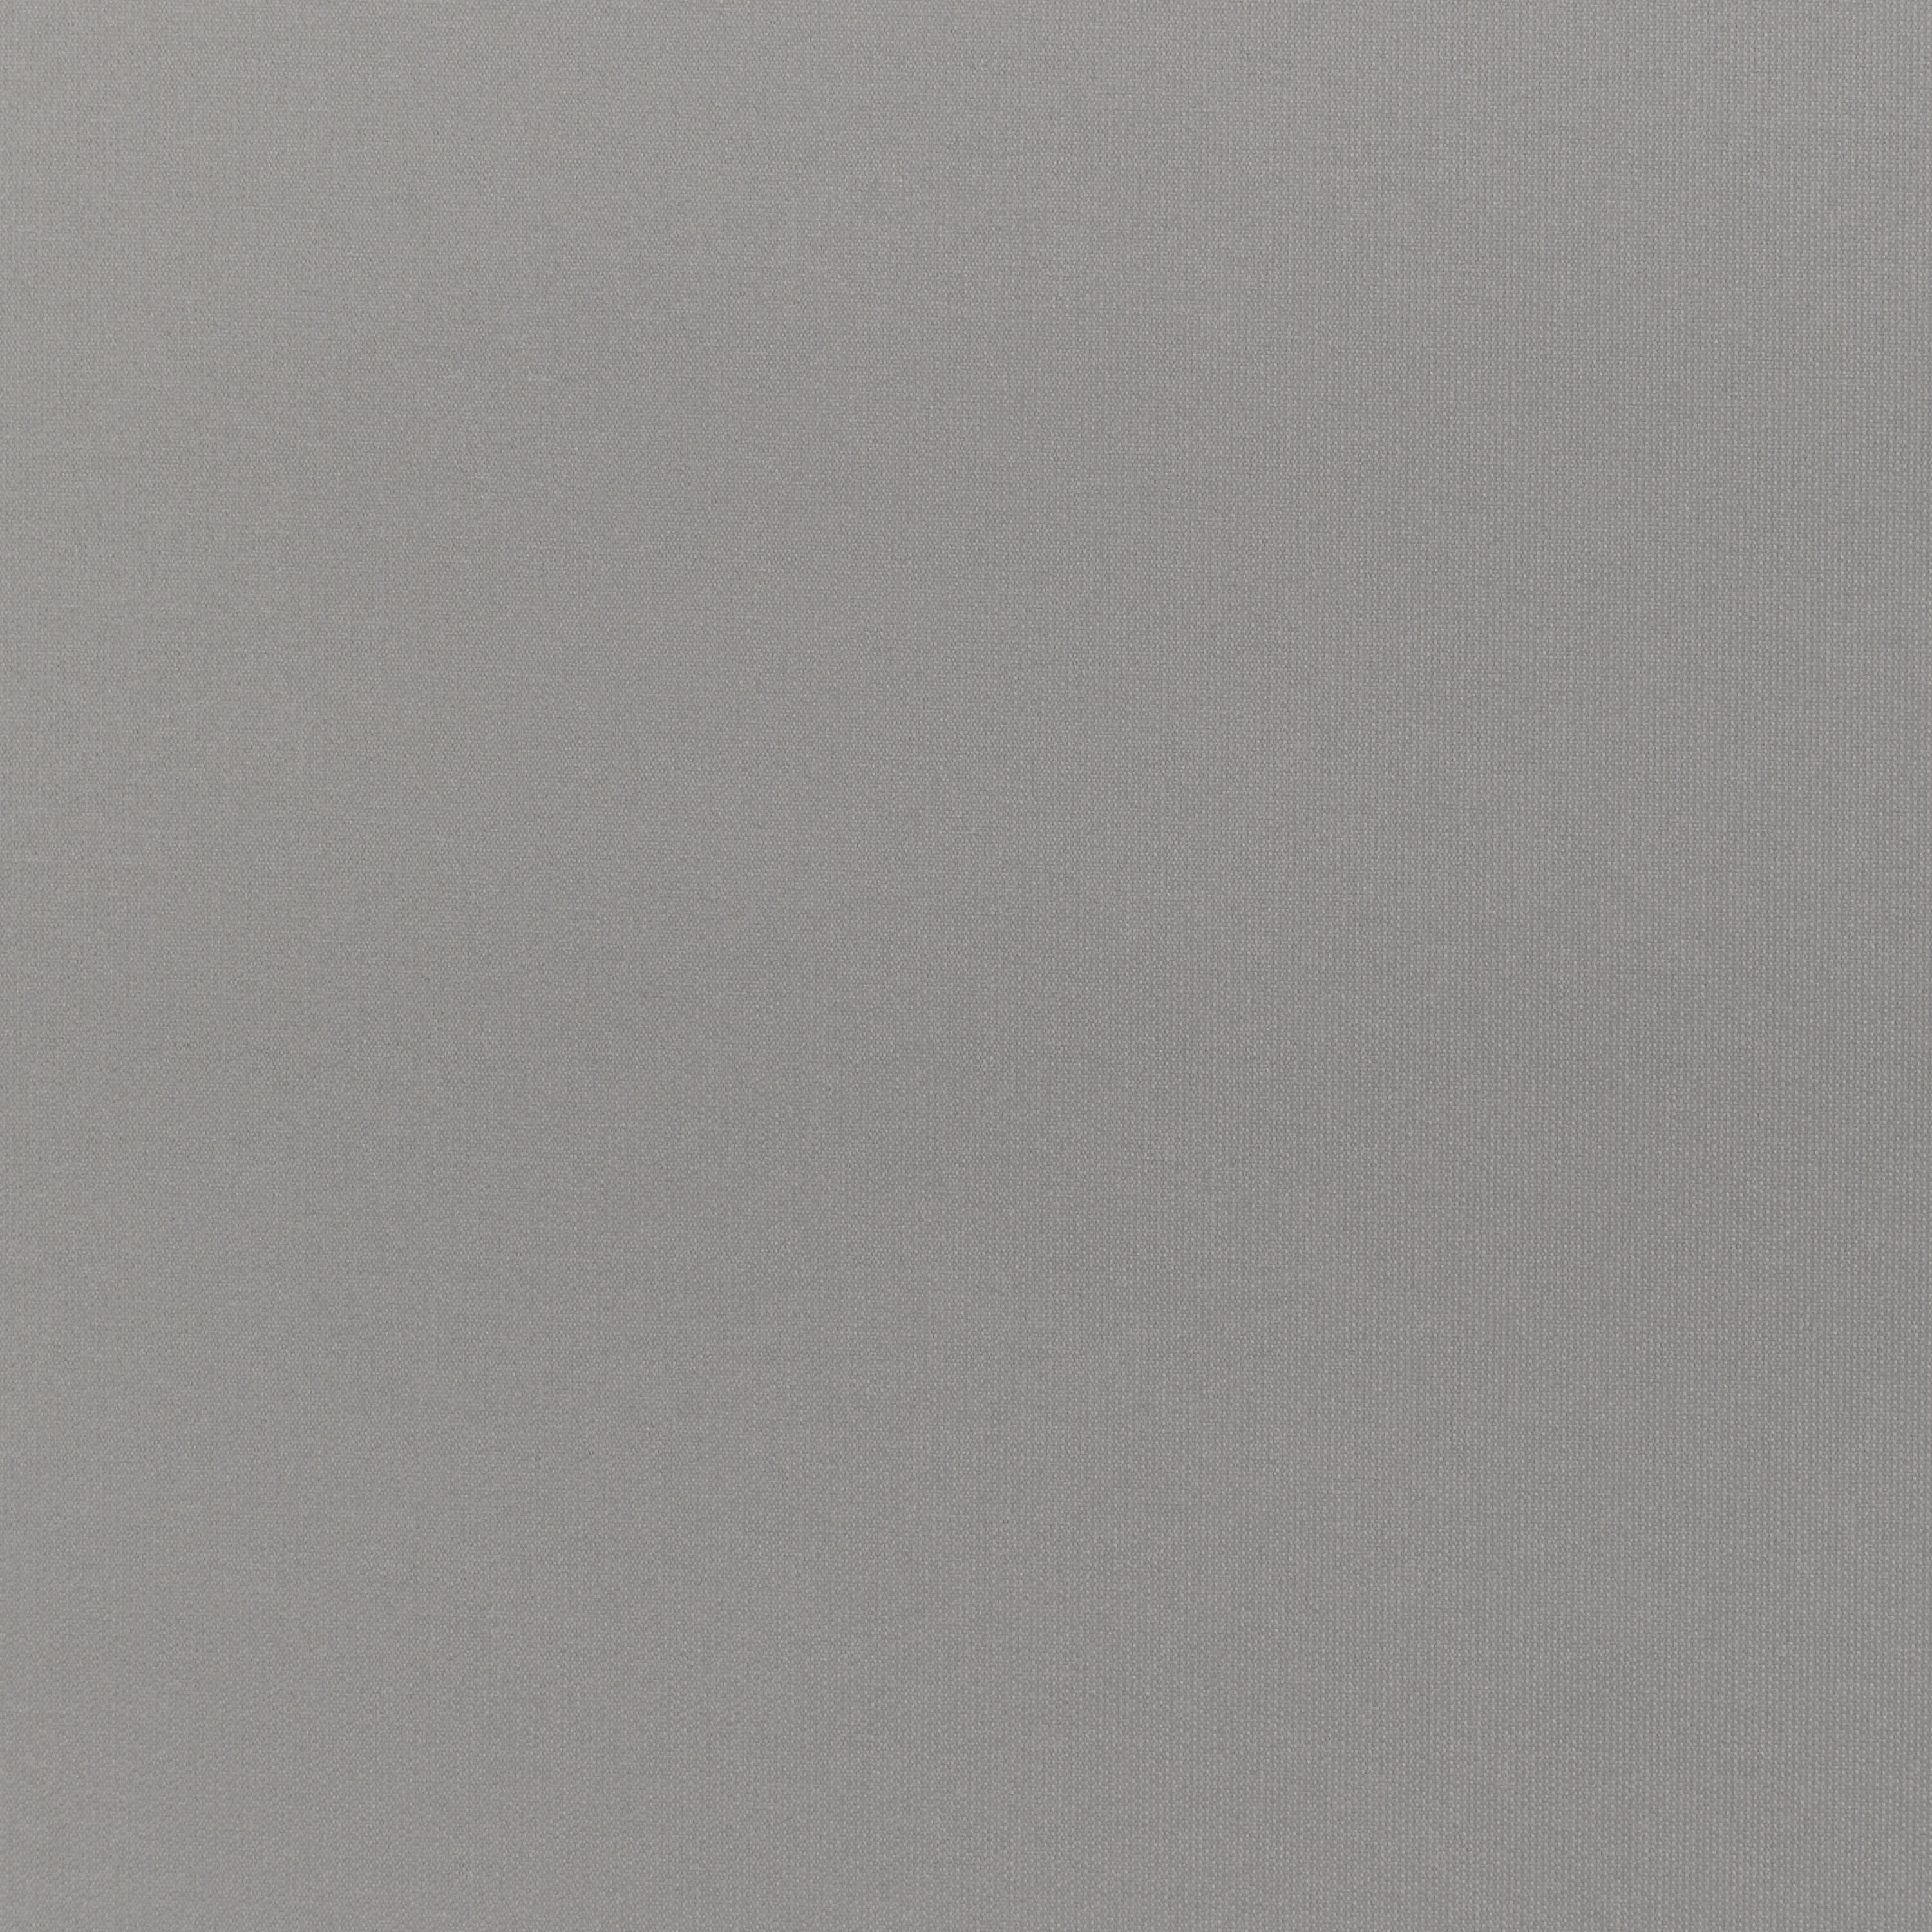 Tenda a rullo oscurante INSPIRE Tokyo grigio 150 x 250 cm - 1